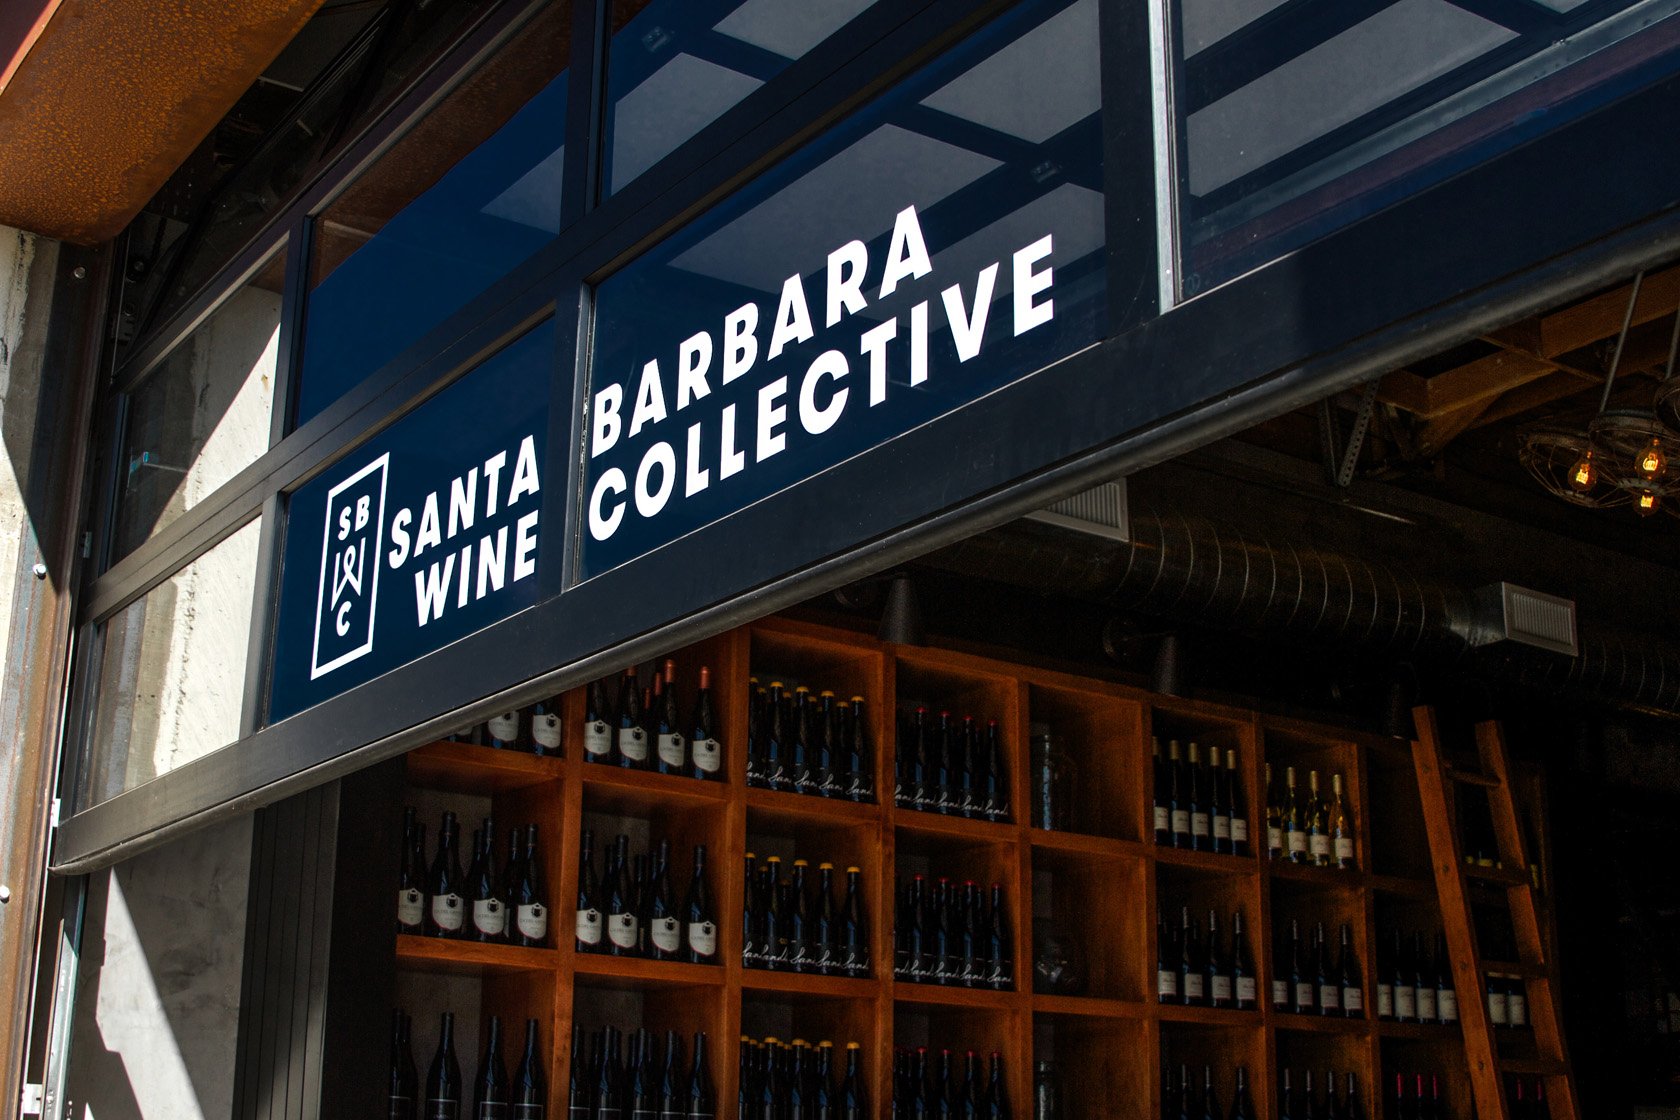 Santa Barbara Wine Collective